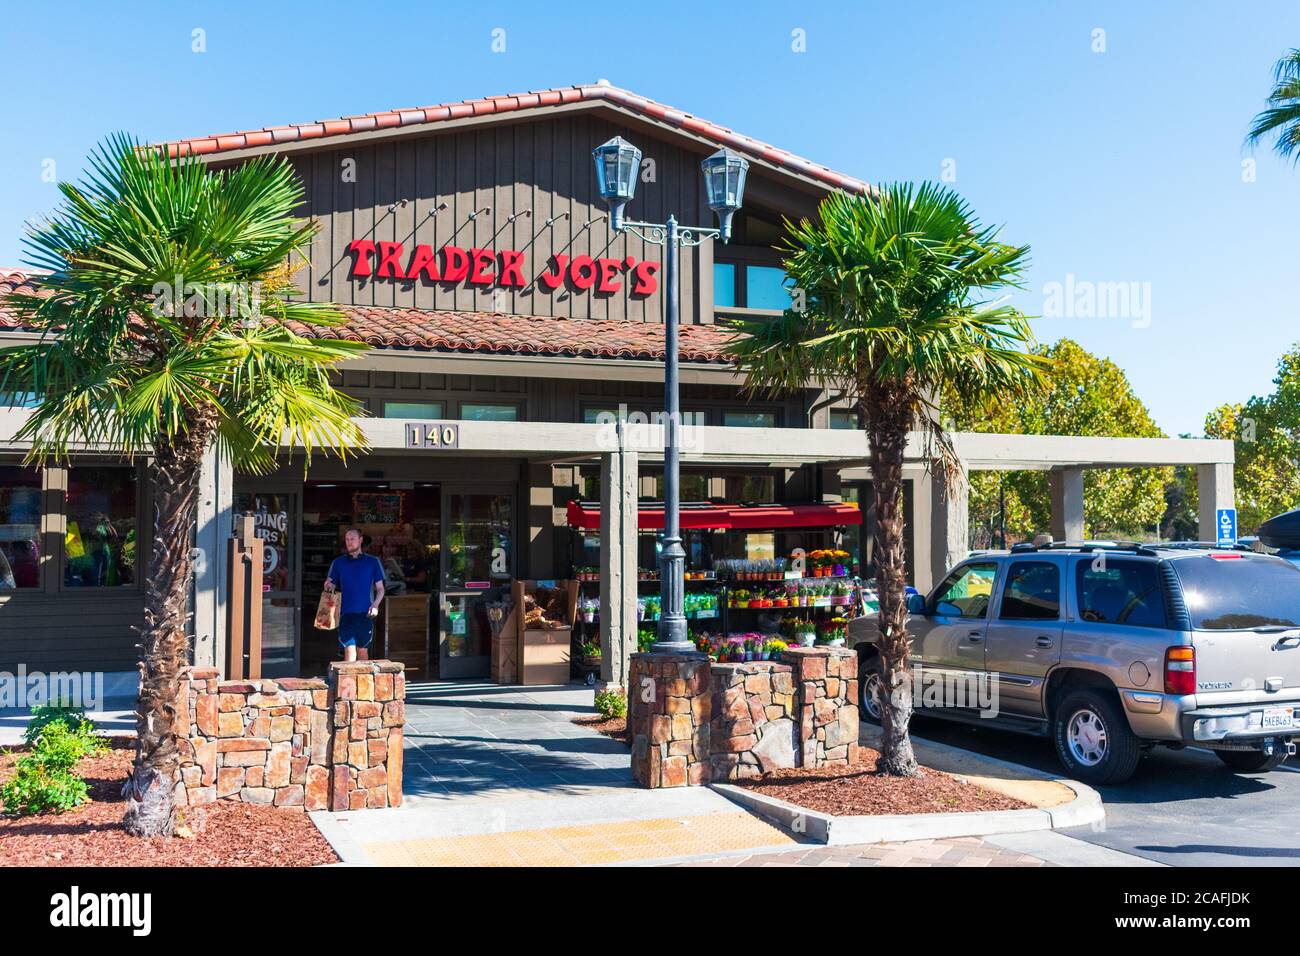 Trader Joe's storefront with palm trees landscape at entrance- Palo Alto, California, USA - 2018 Stock Photo